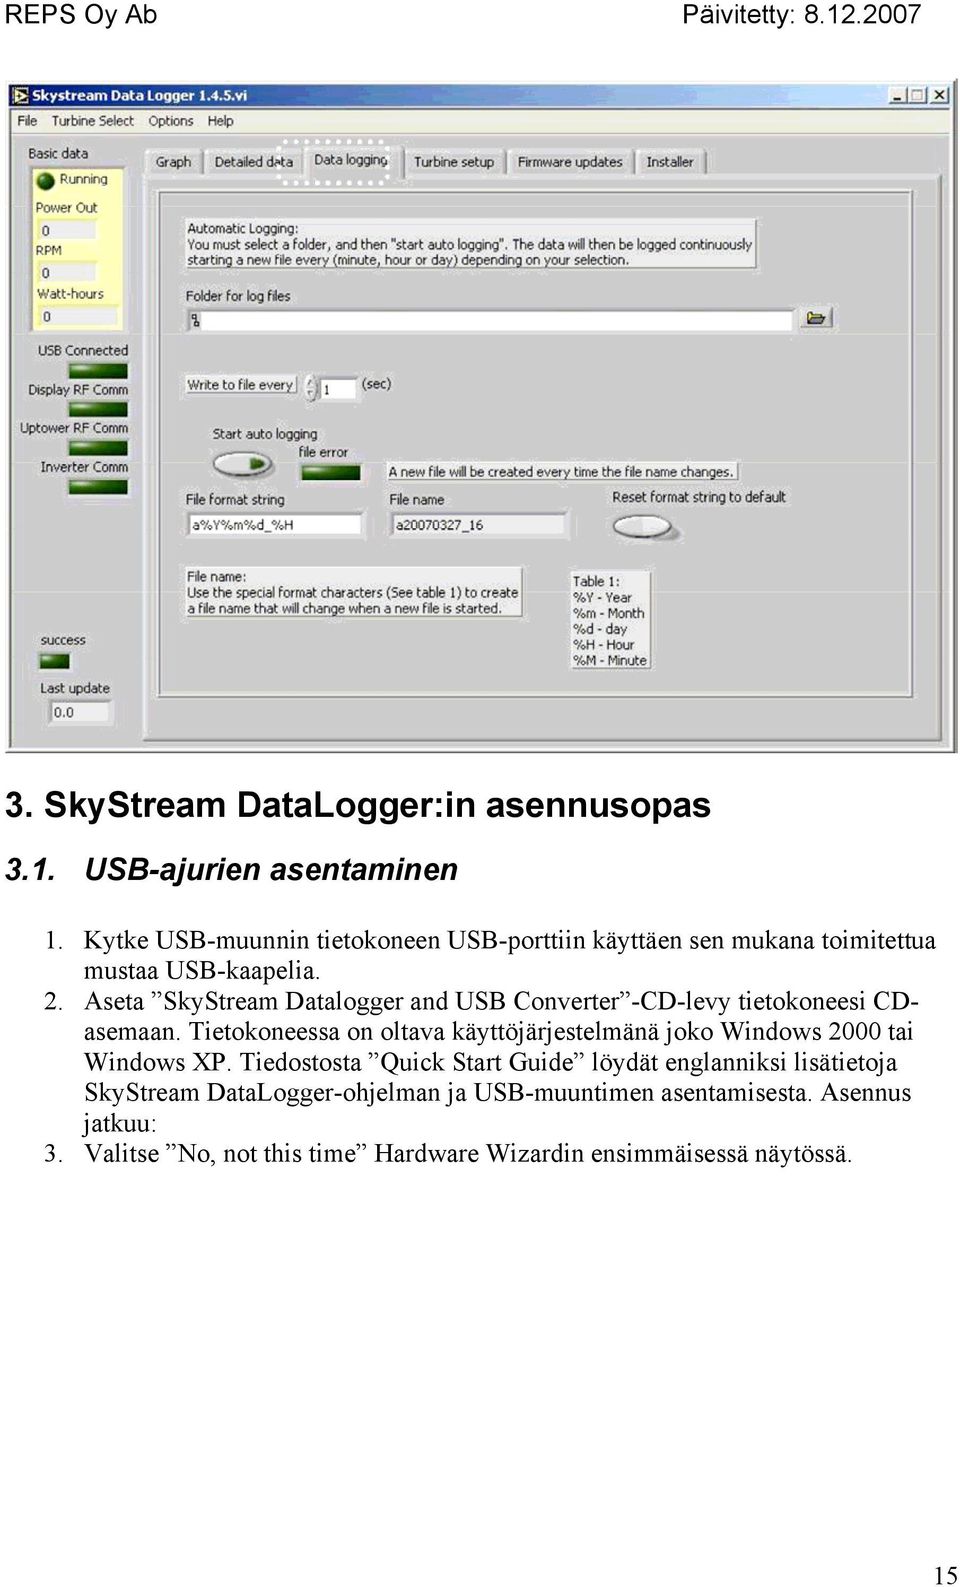 Aseta SkyStream Datalogger and USB Converter -CD-levy tietokoneesi CDasemaan.